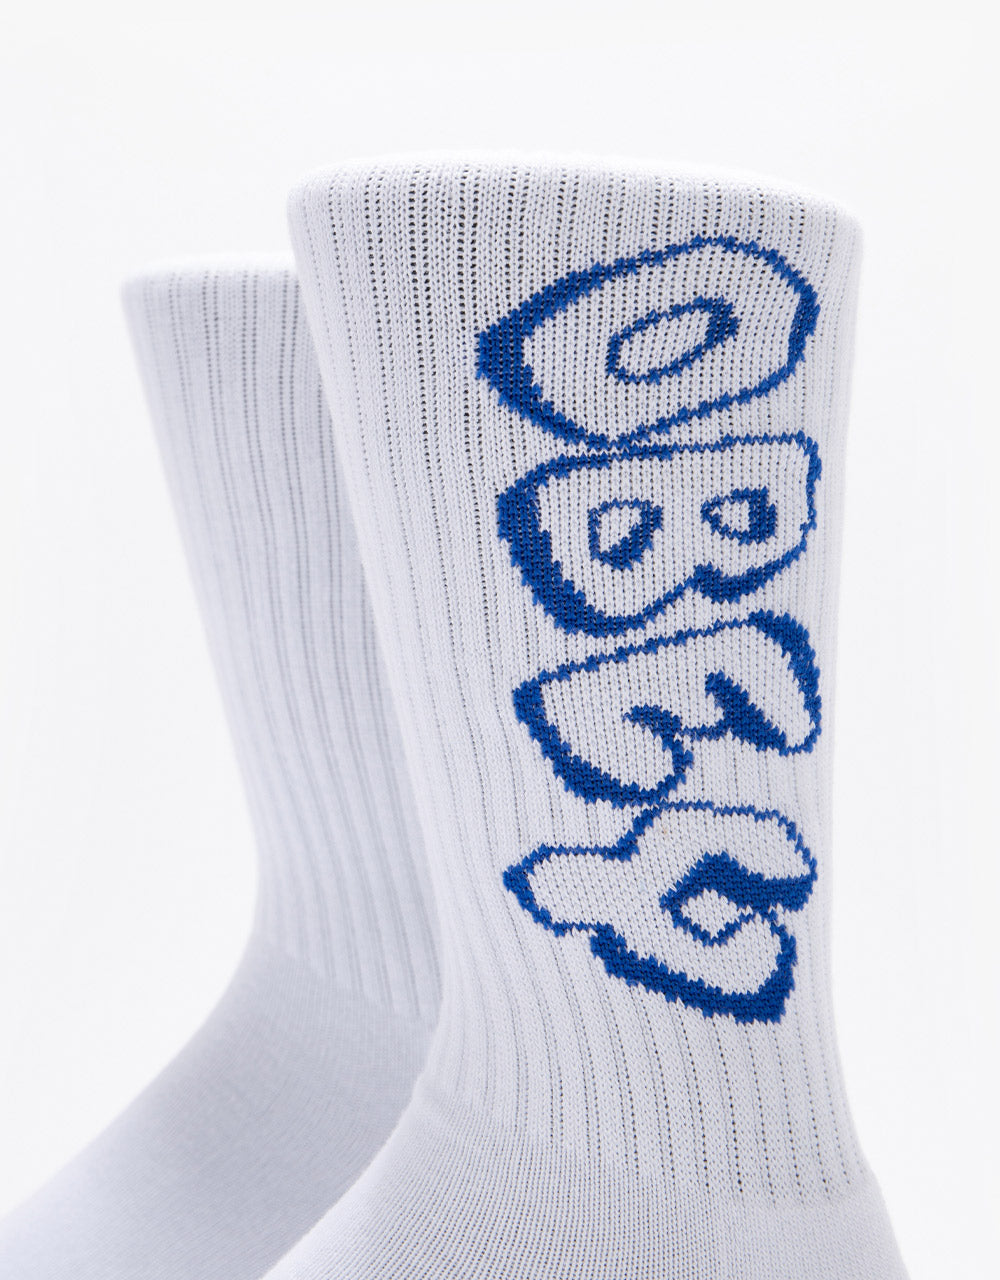 Obey Block Socks - White